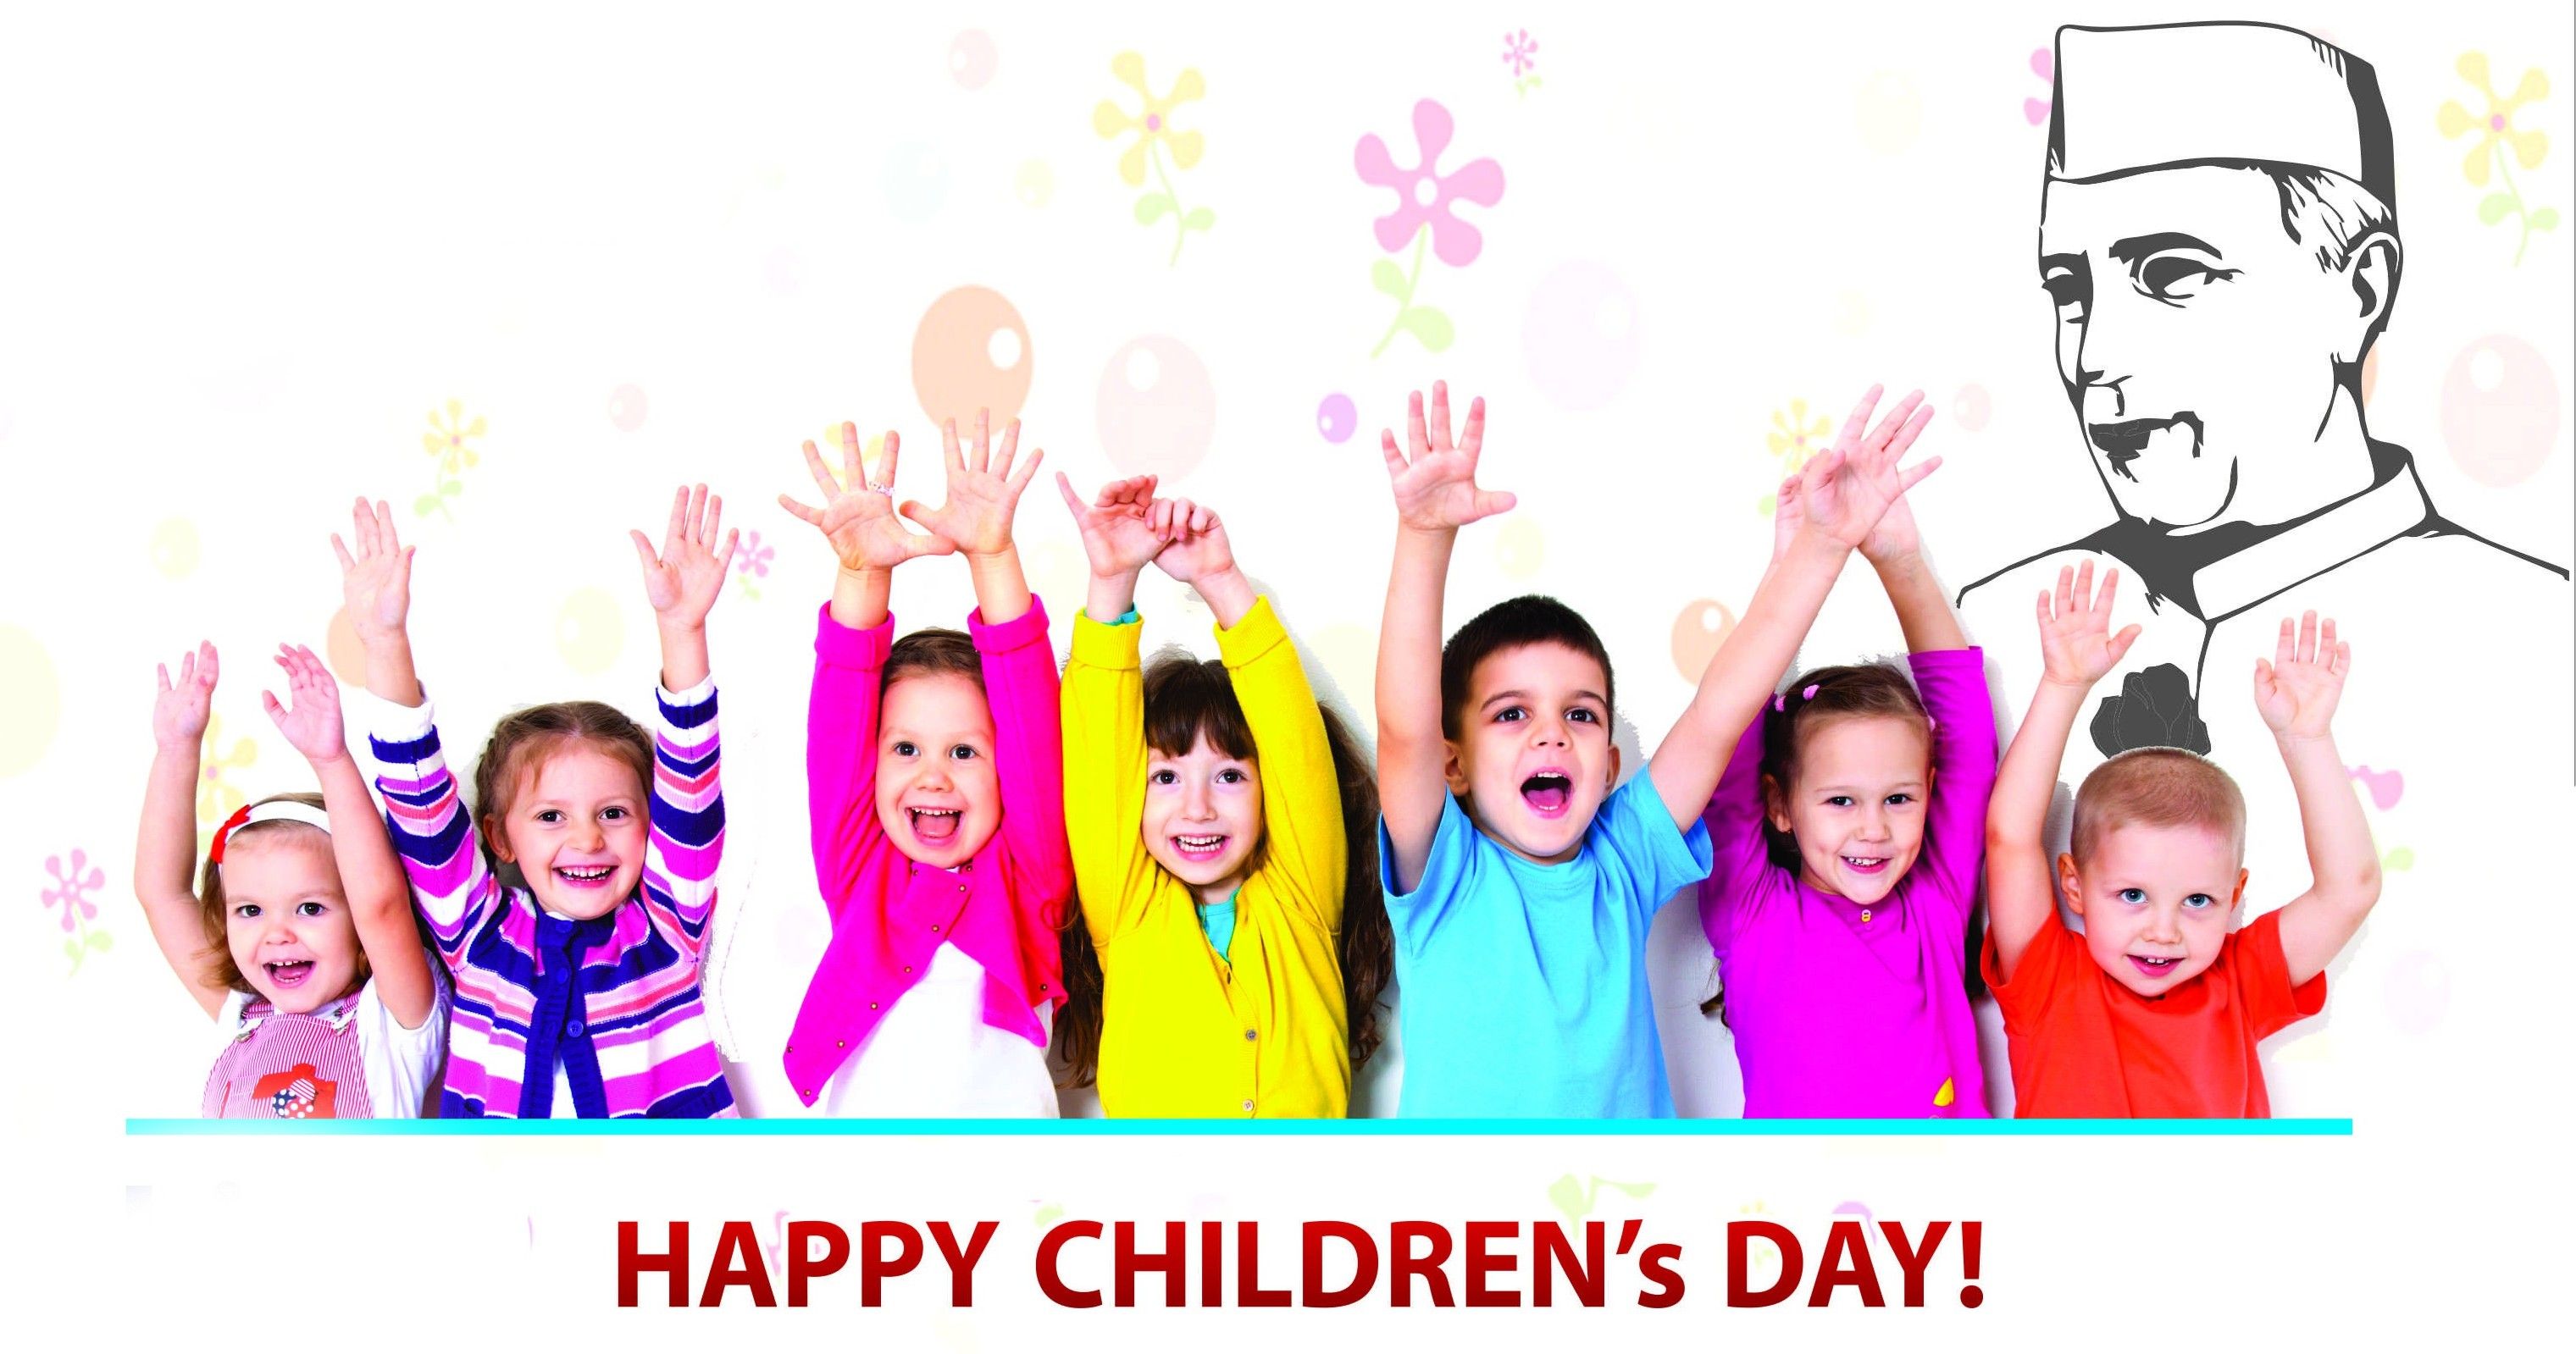 Happy Children's Day Image, HD Wallpaper: Bal Diwas Pics & Photo for Facebook, WhatsApp